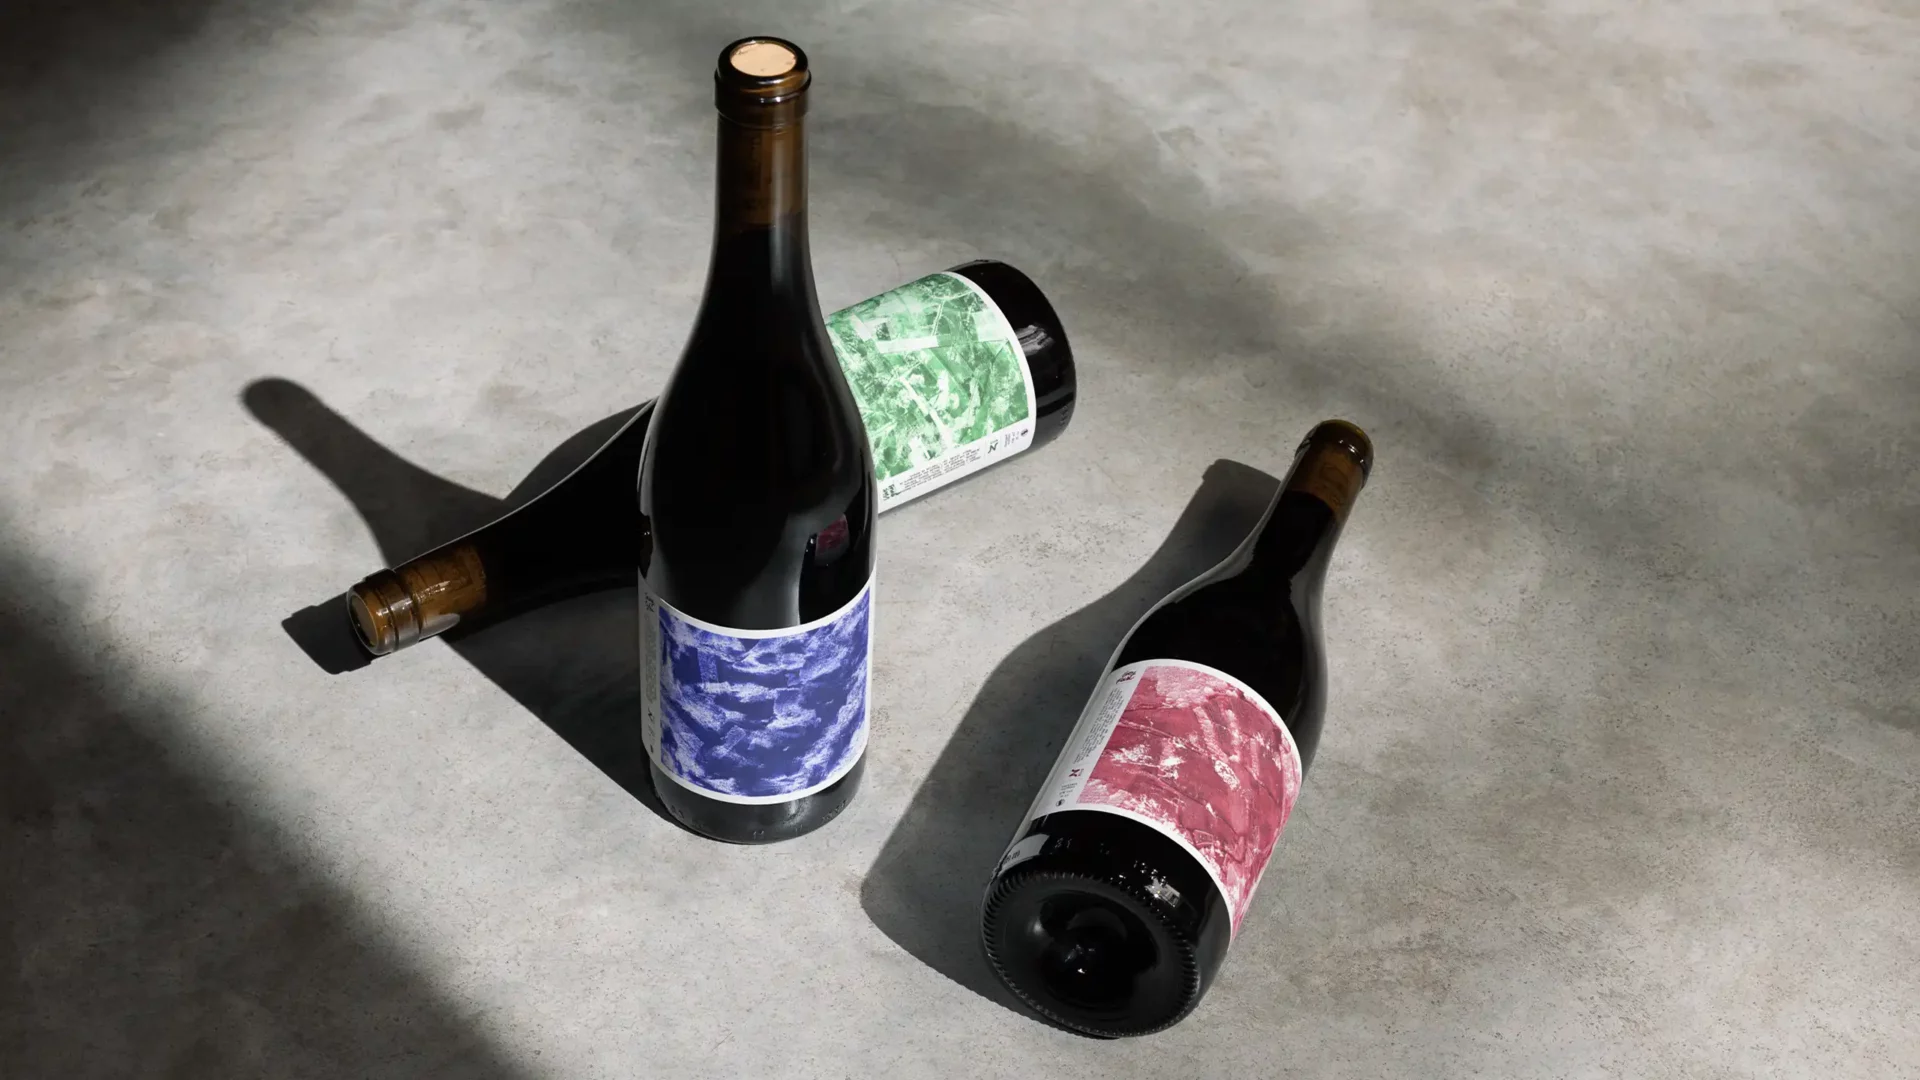 Three bottles of Zinneke Wine laying on the floor